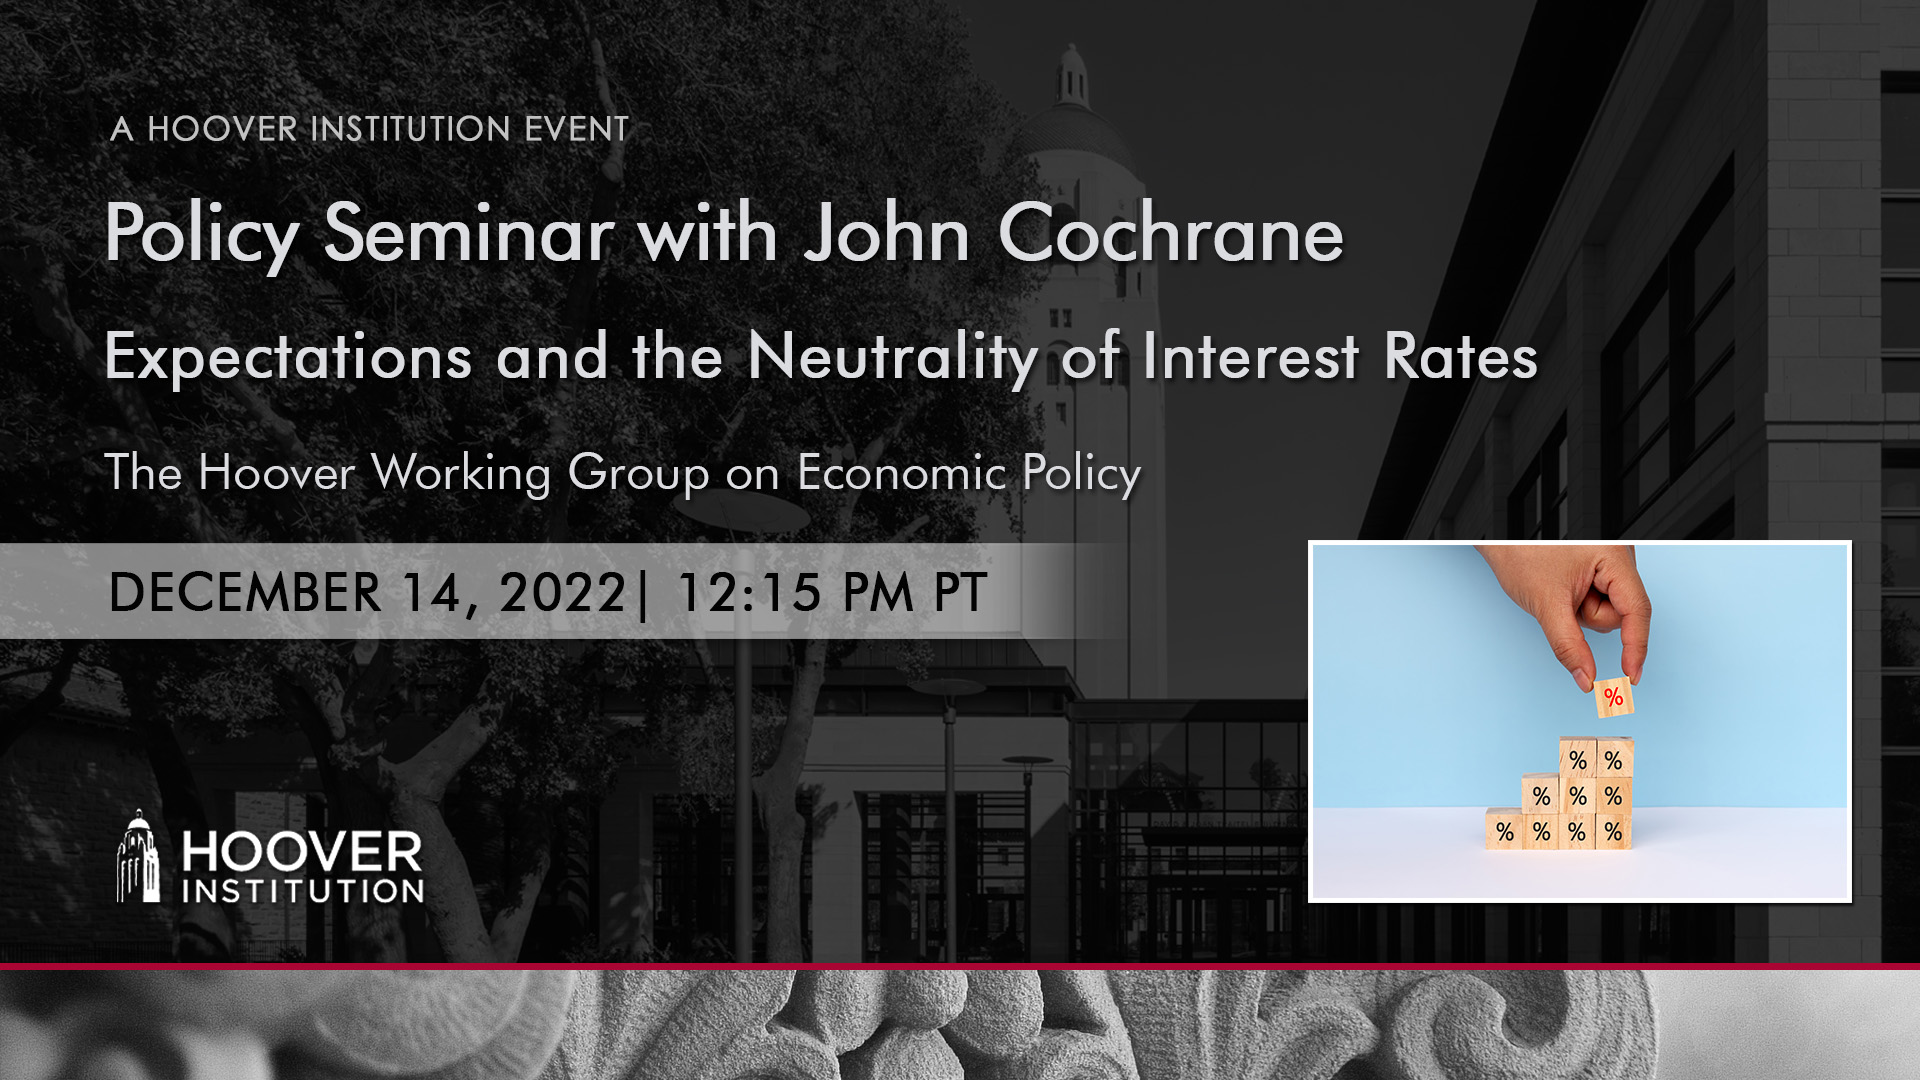 Policy Seminar with John Cochrane